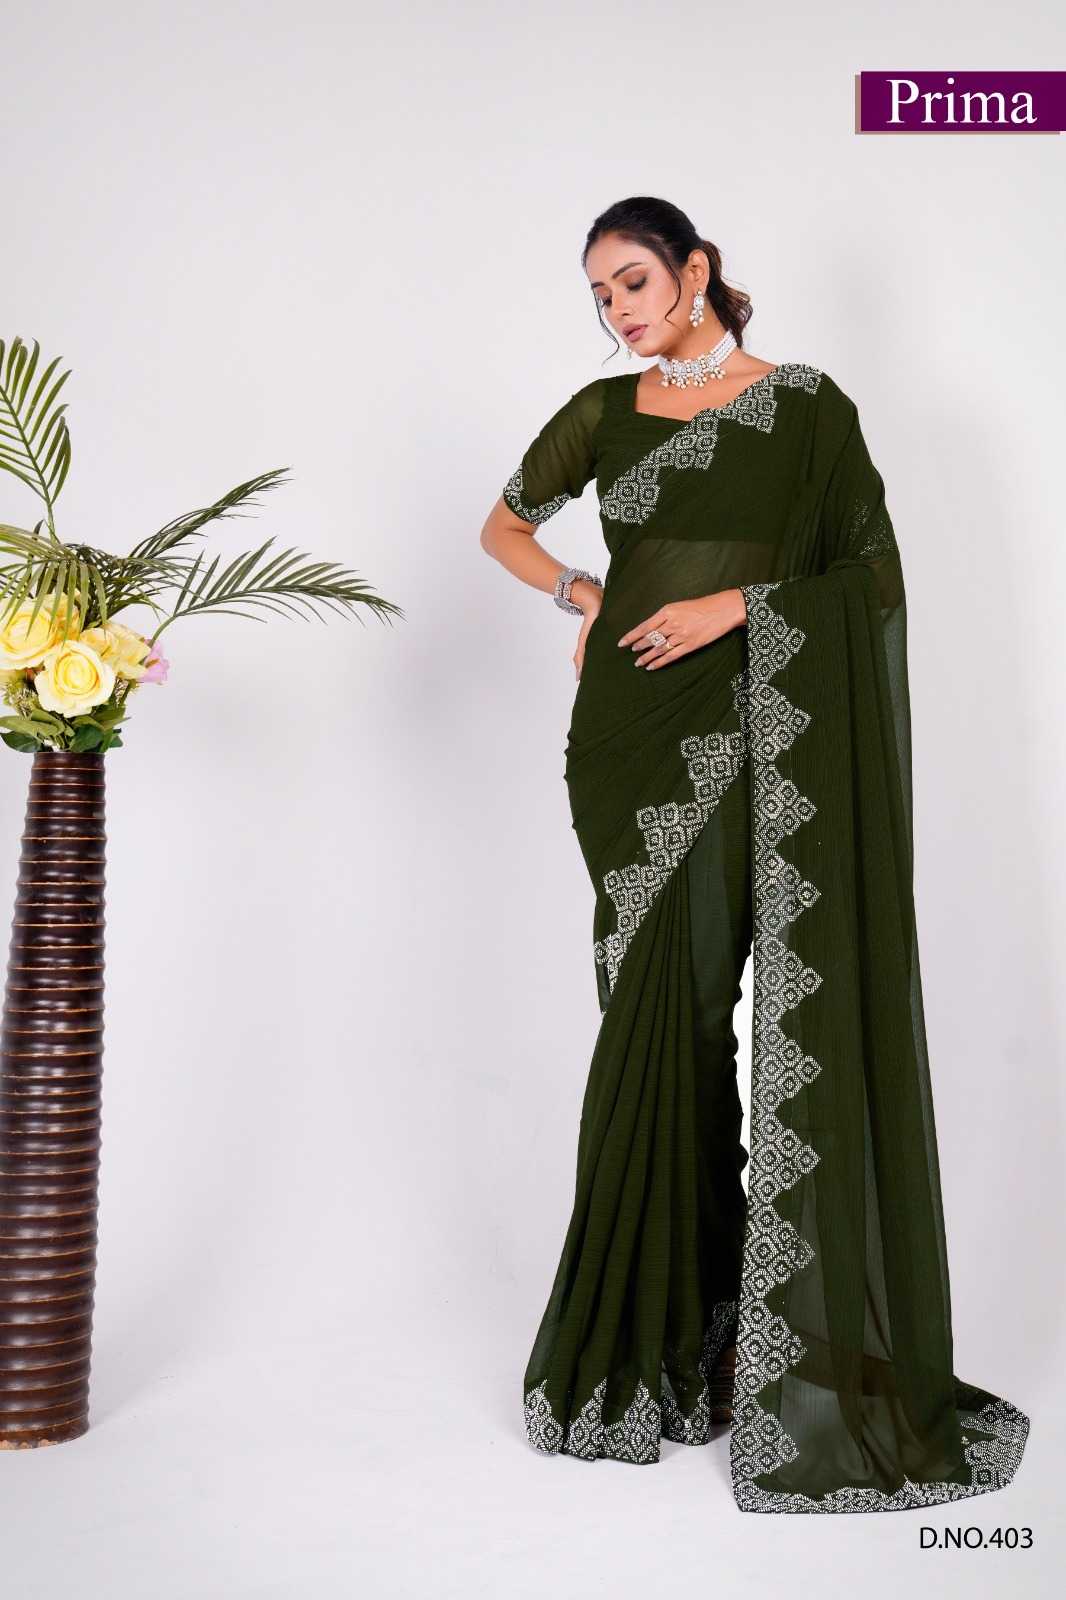 prima 401 to 408 zomato fancy exclusive party wear saree wholesaler 